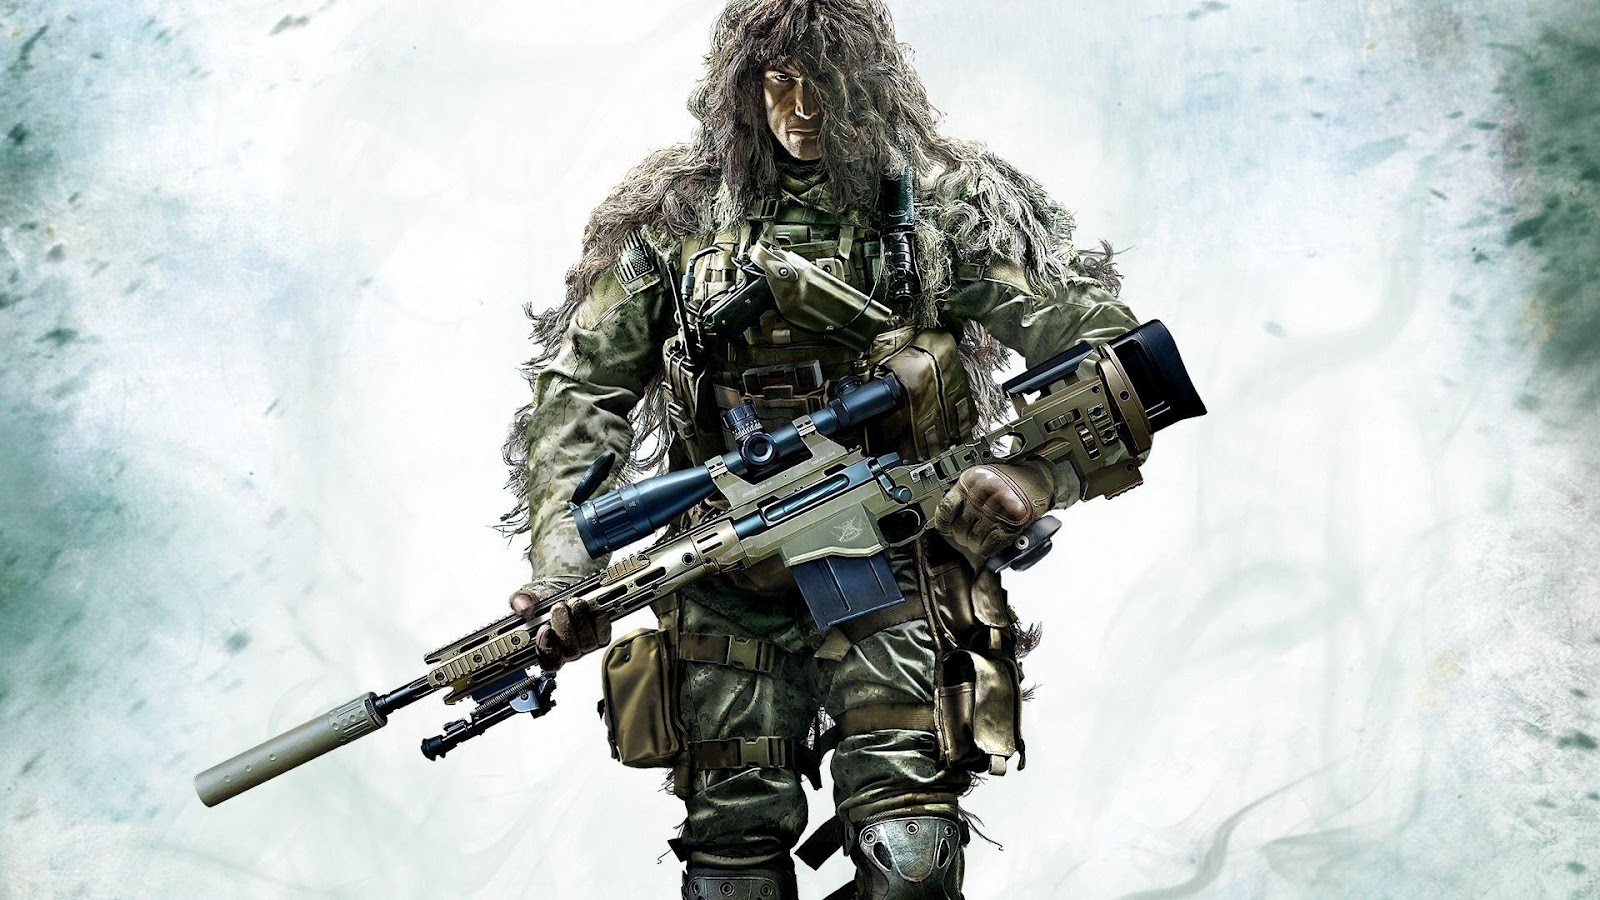 http://download.gamezone.com/uploads/image/data/1214994/sniper-ghost-warrior-3-1.jpg